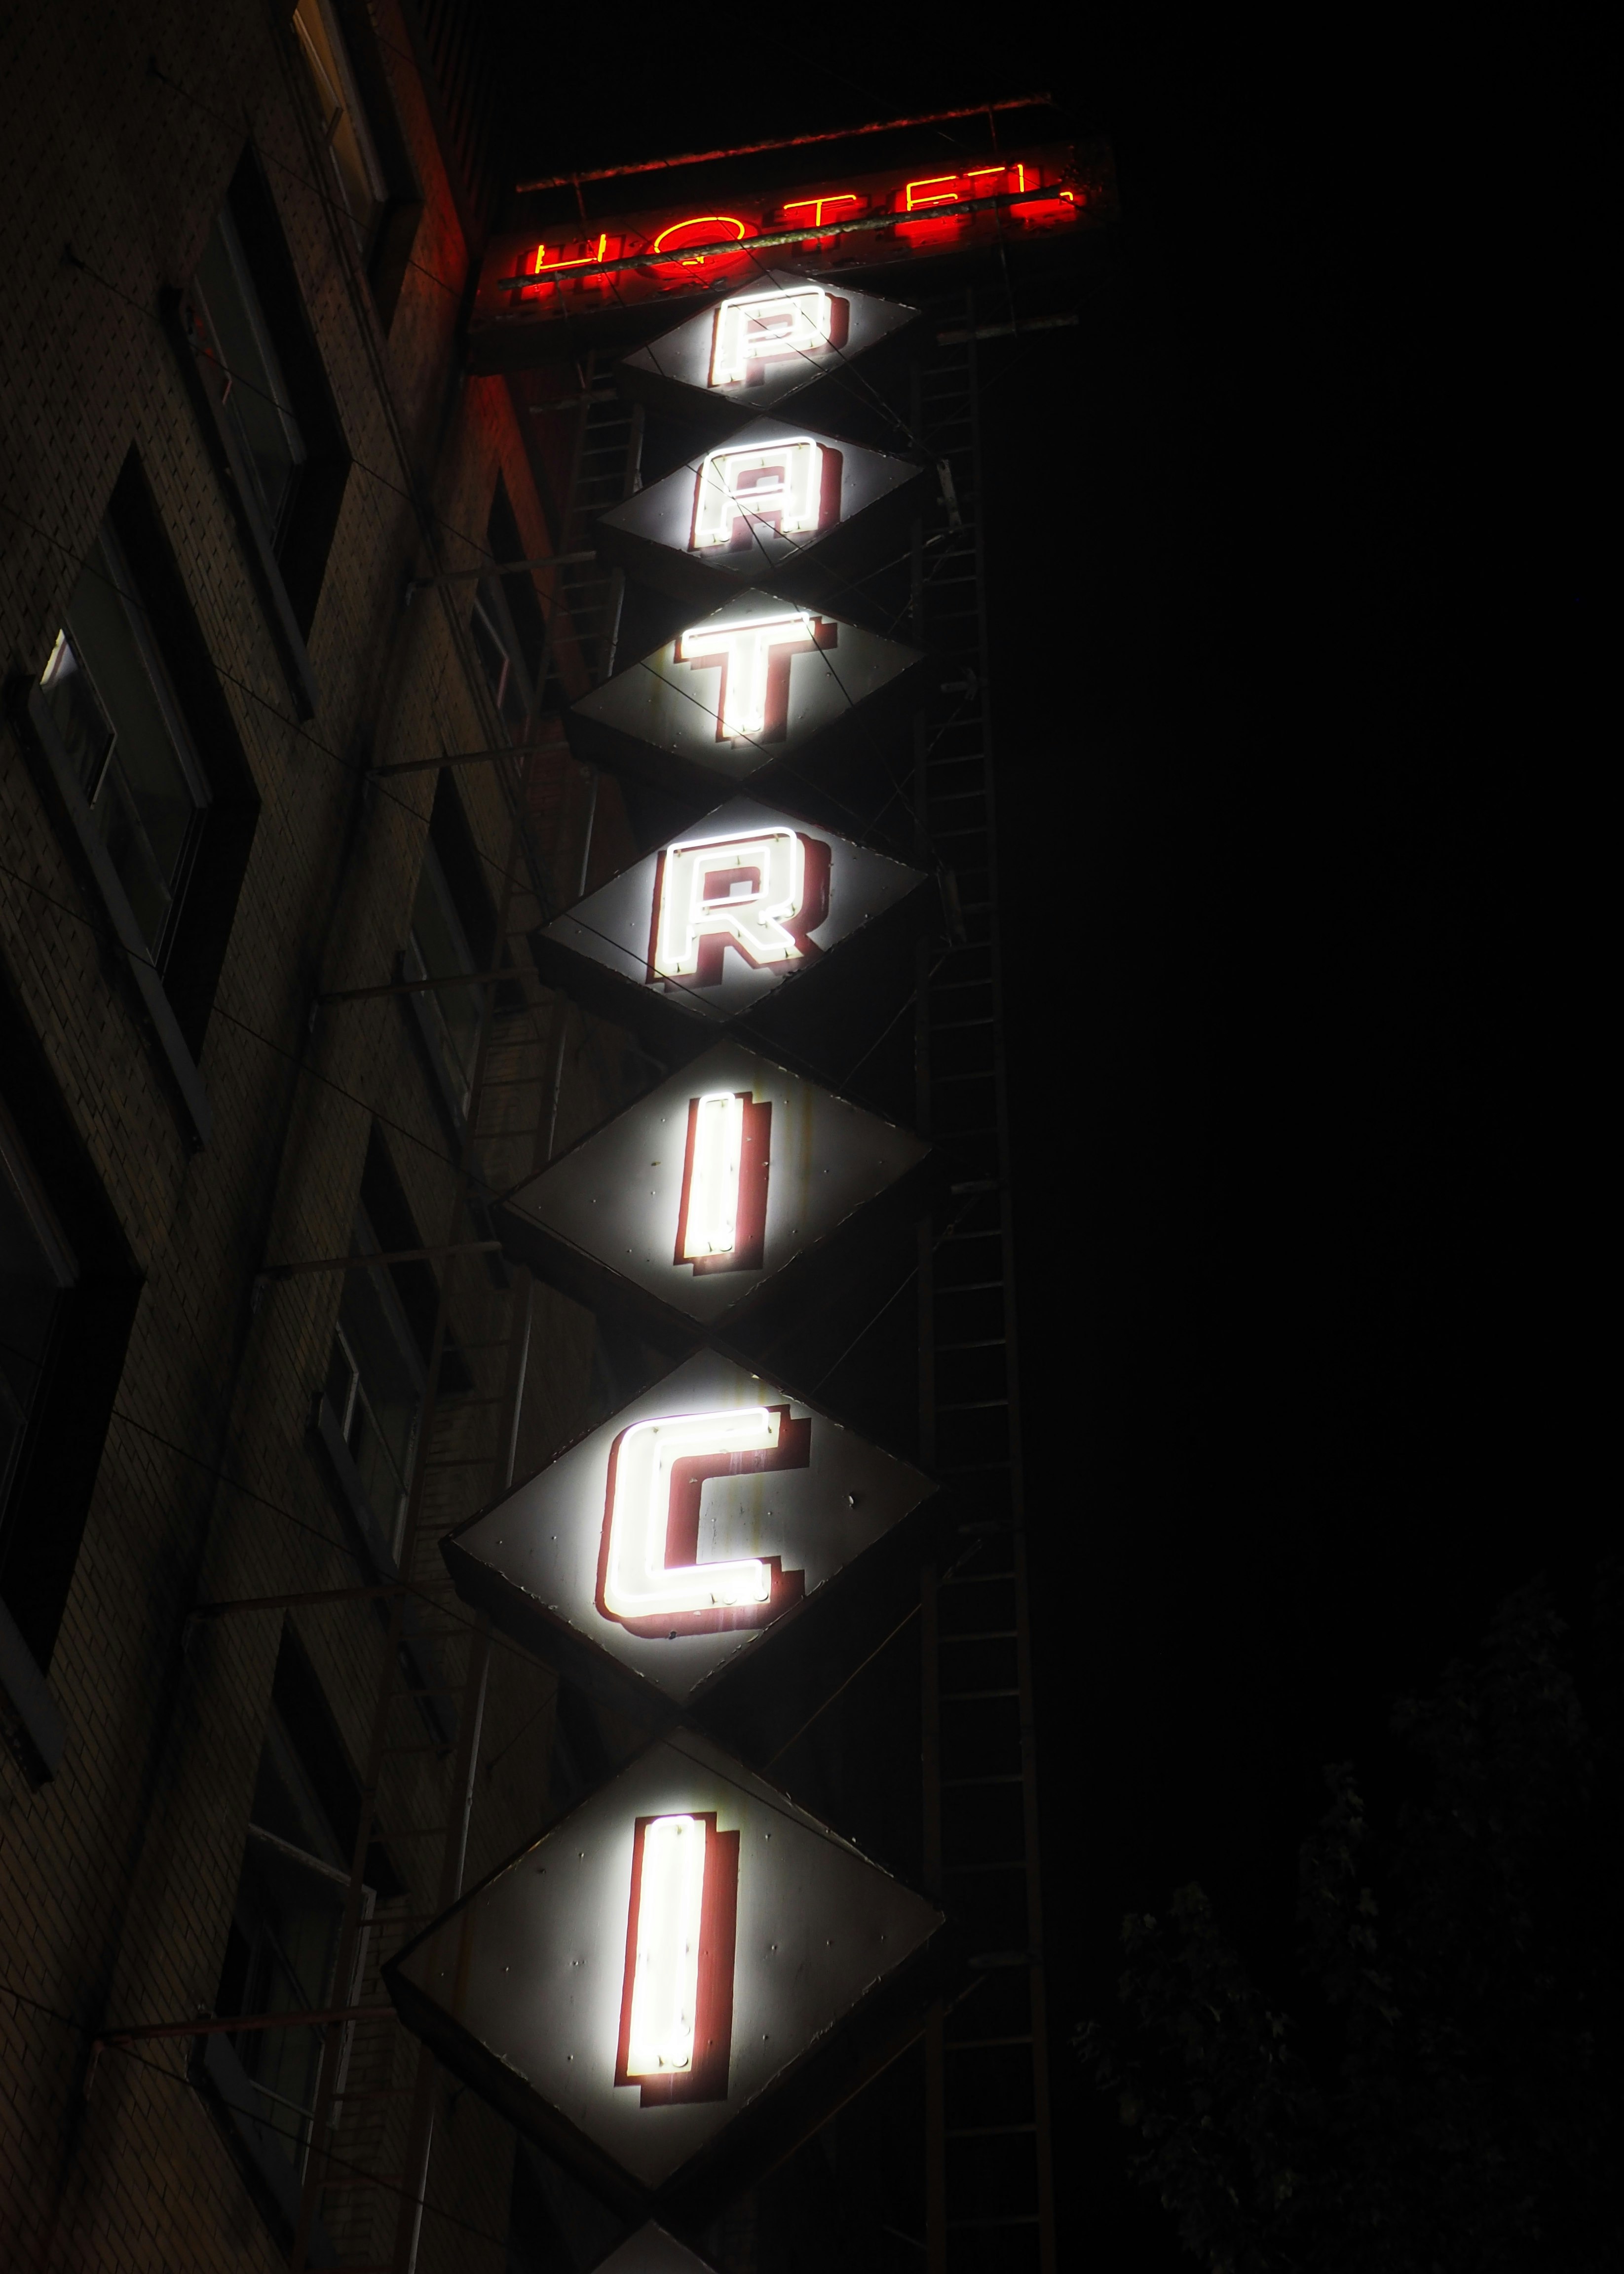 Hotel signage at night